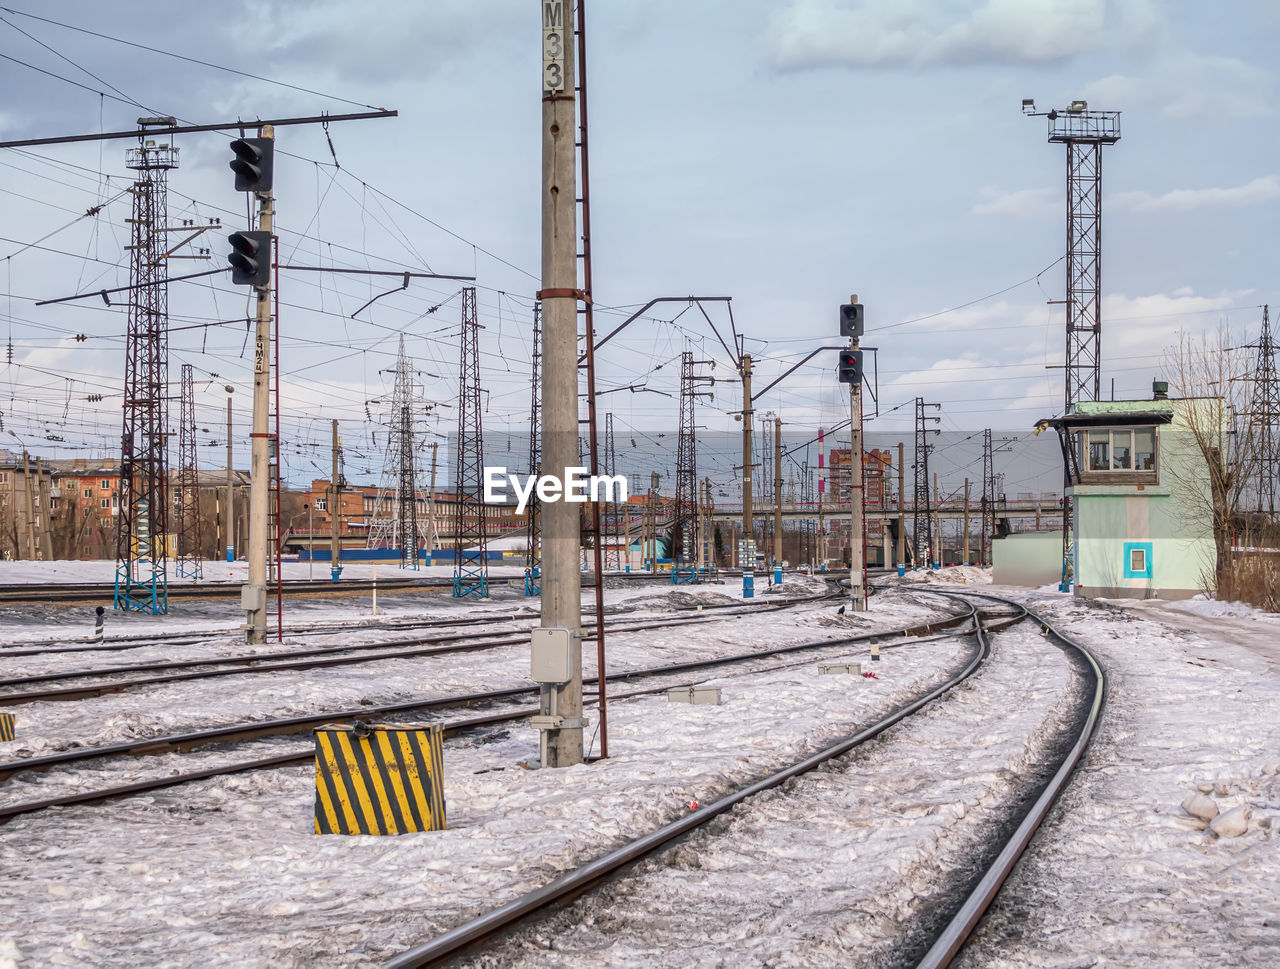 The railway hub in winter. trans-siberian railway.